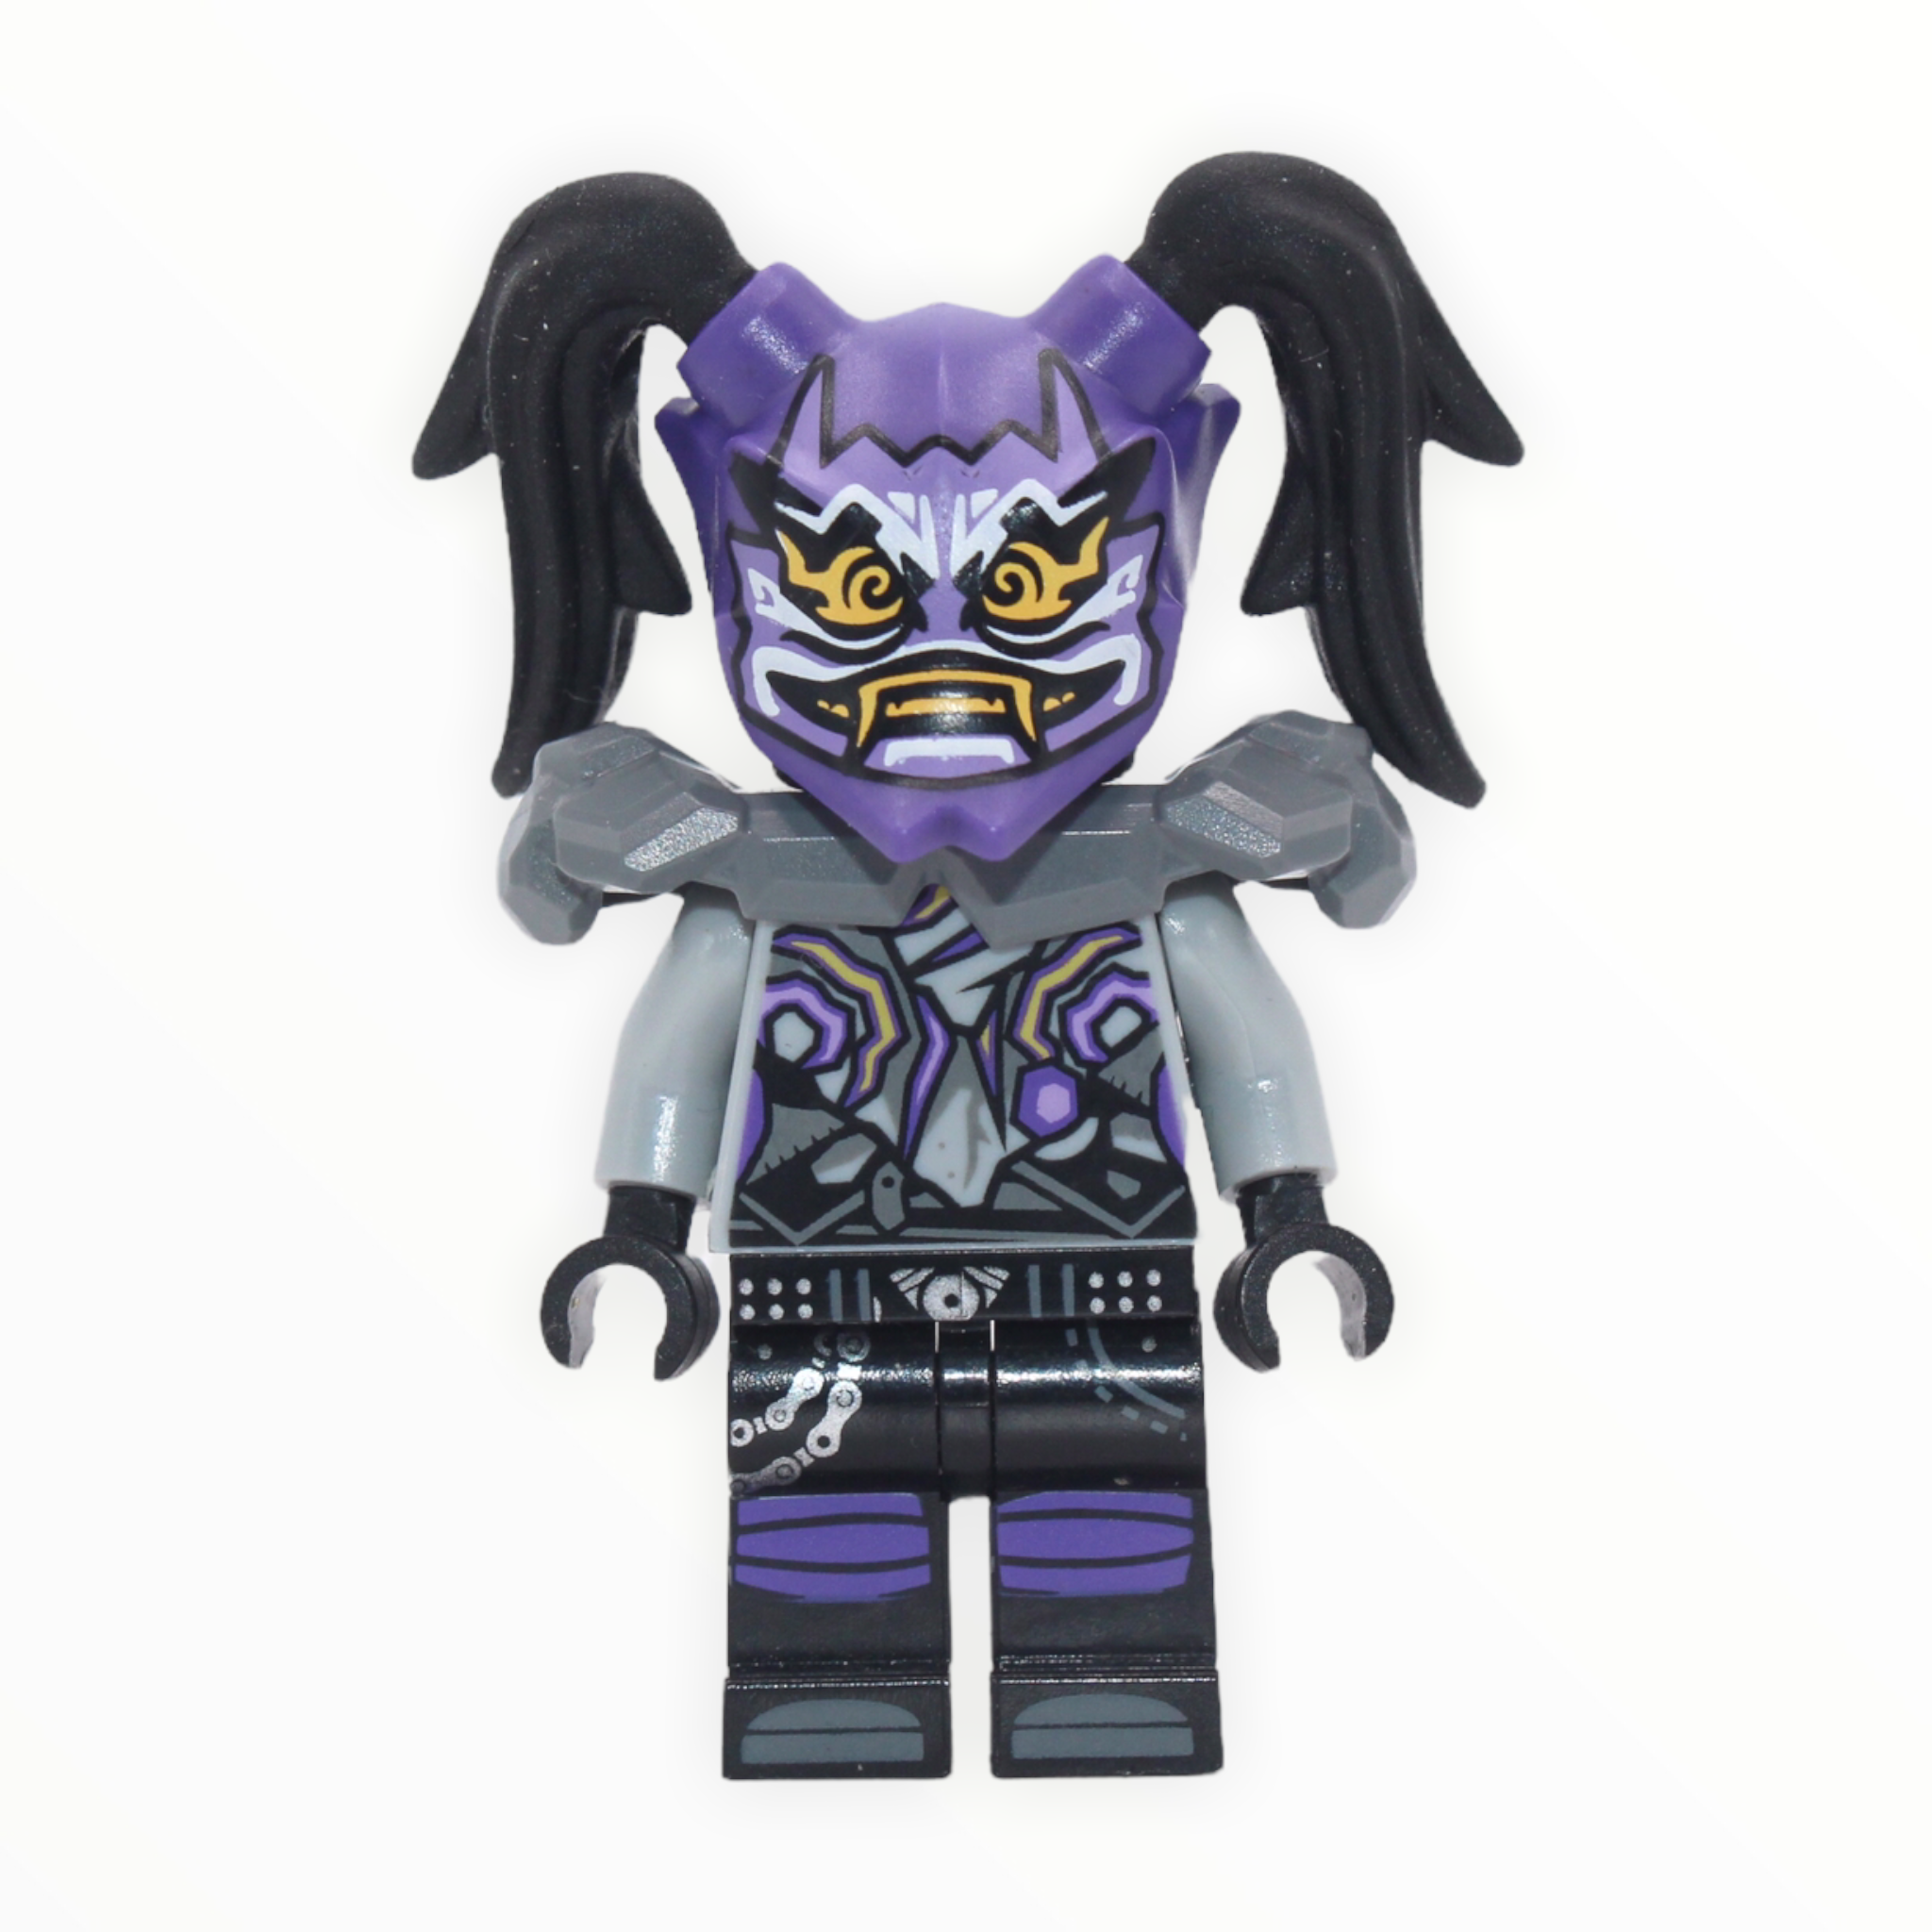 Ultra Violet (Oni Mask of Hatred)